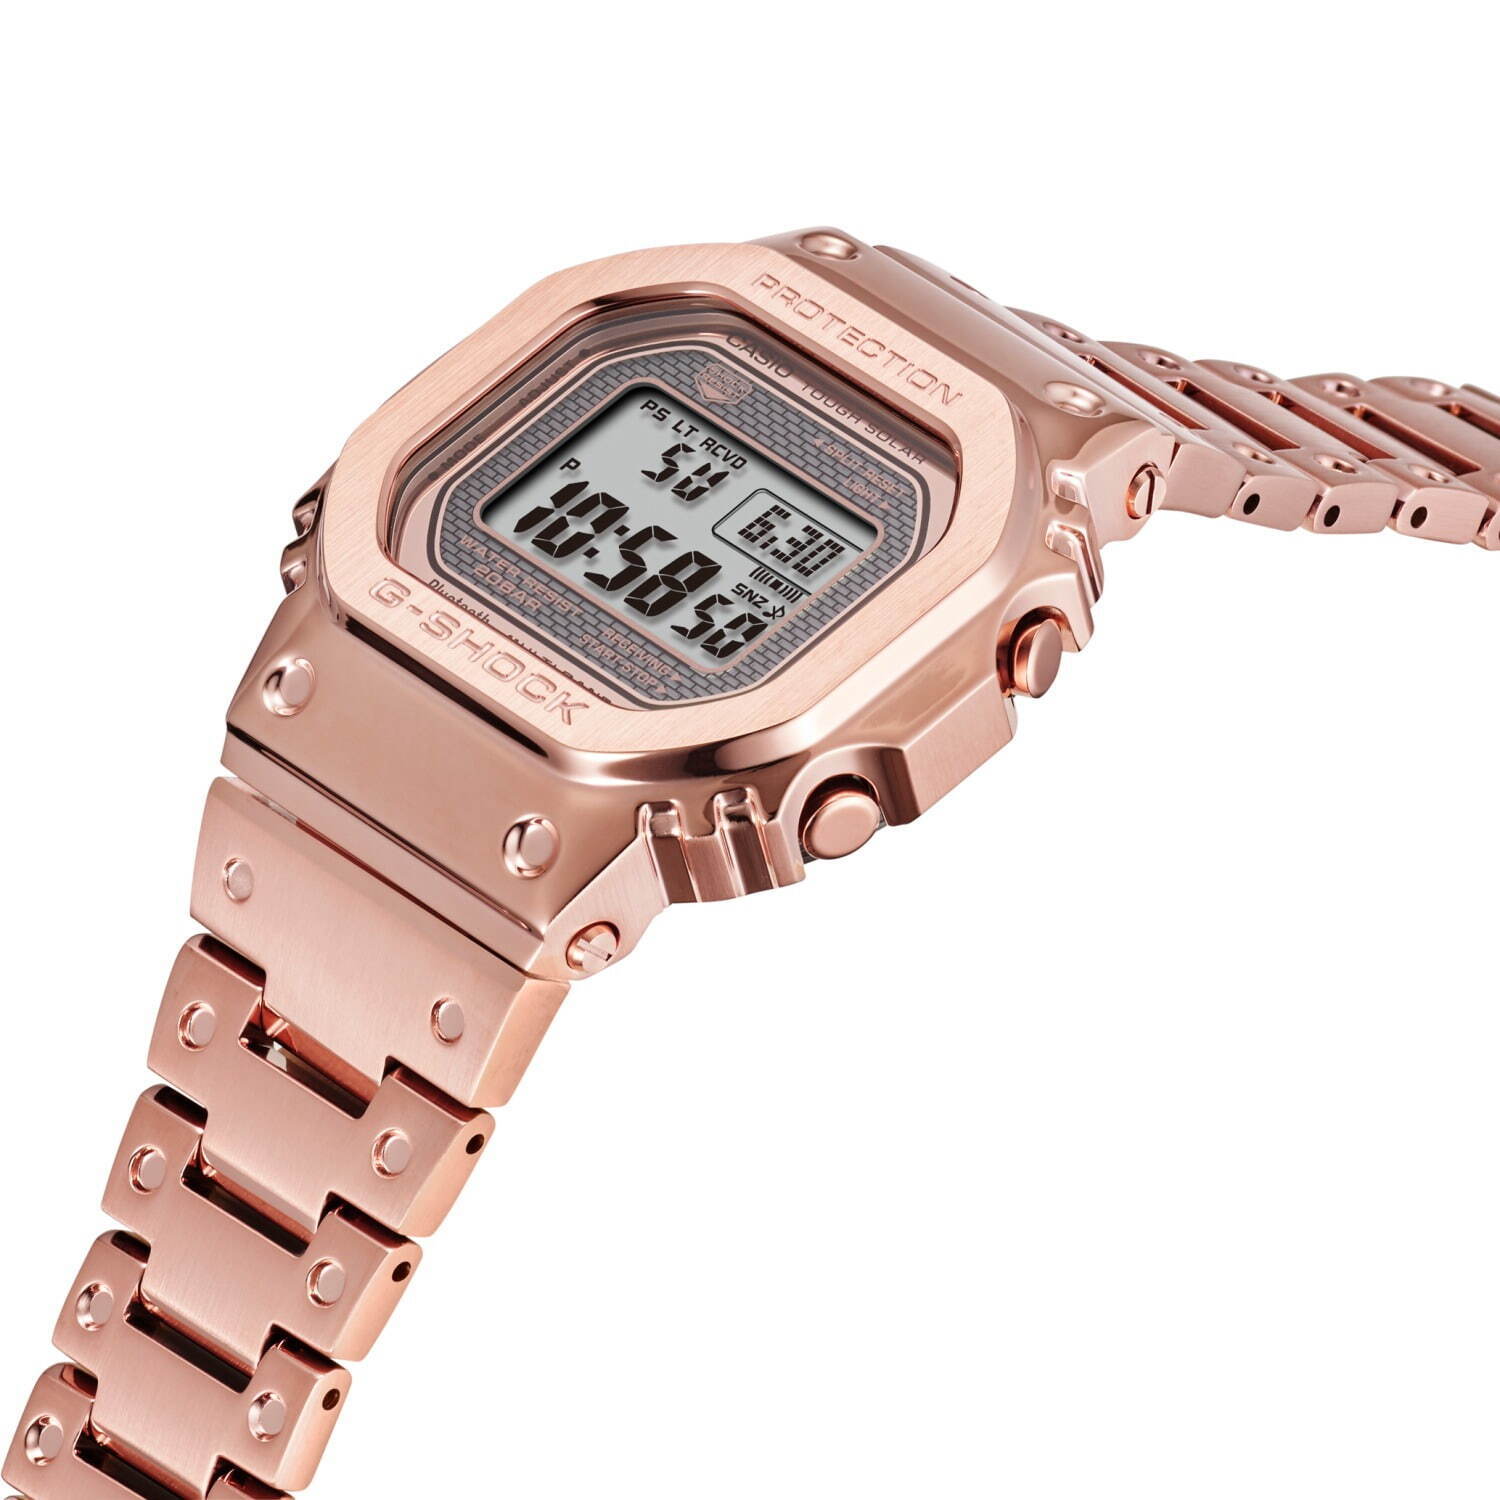 G SHOCK“ローズゴールド”のフルメタル腕時計、“金属の塊”から削りだ